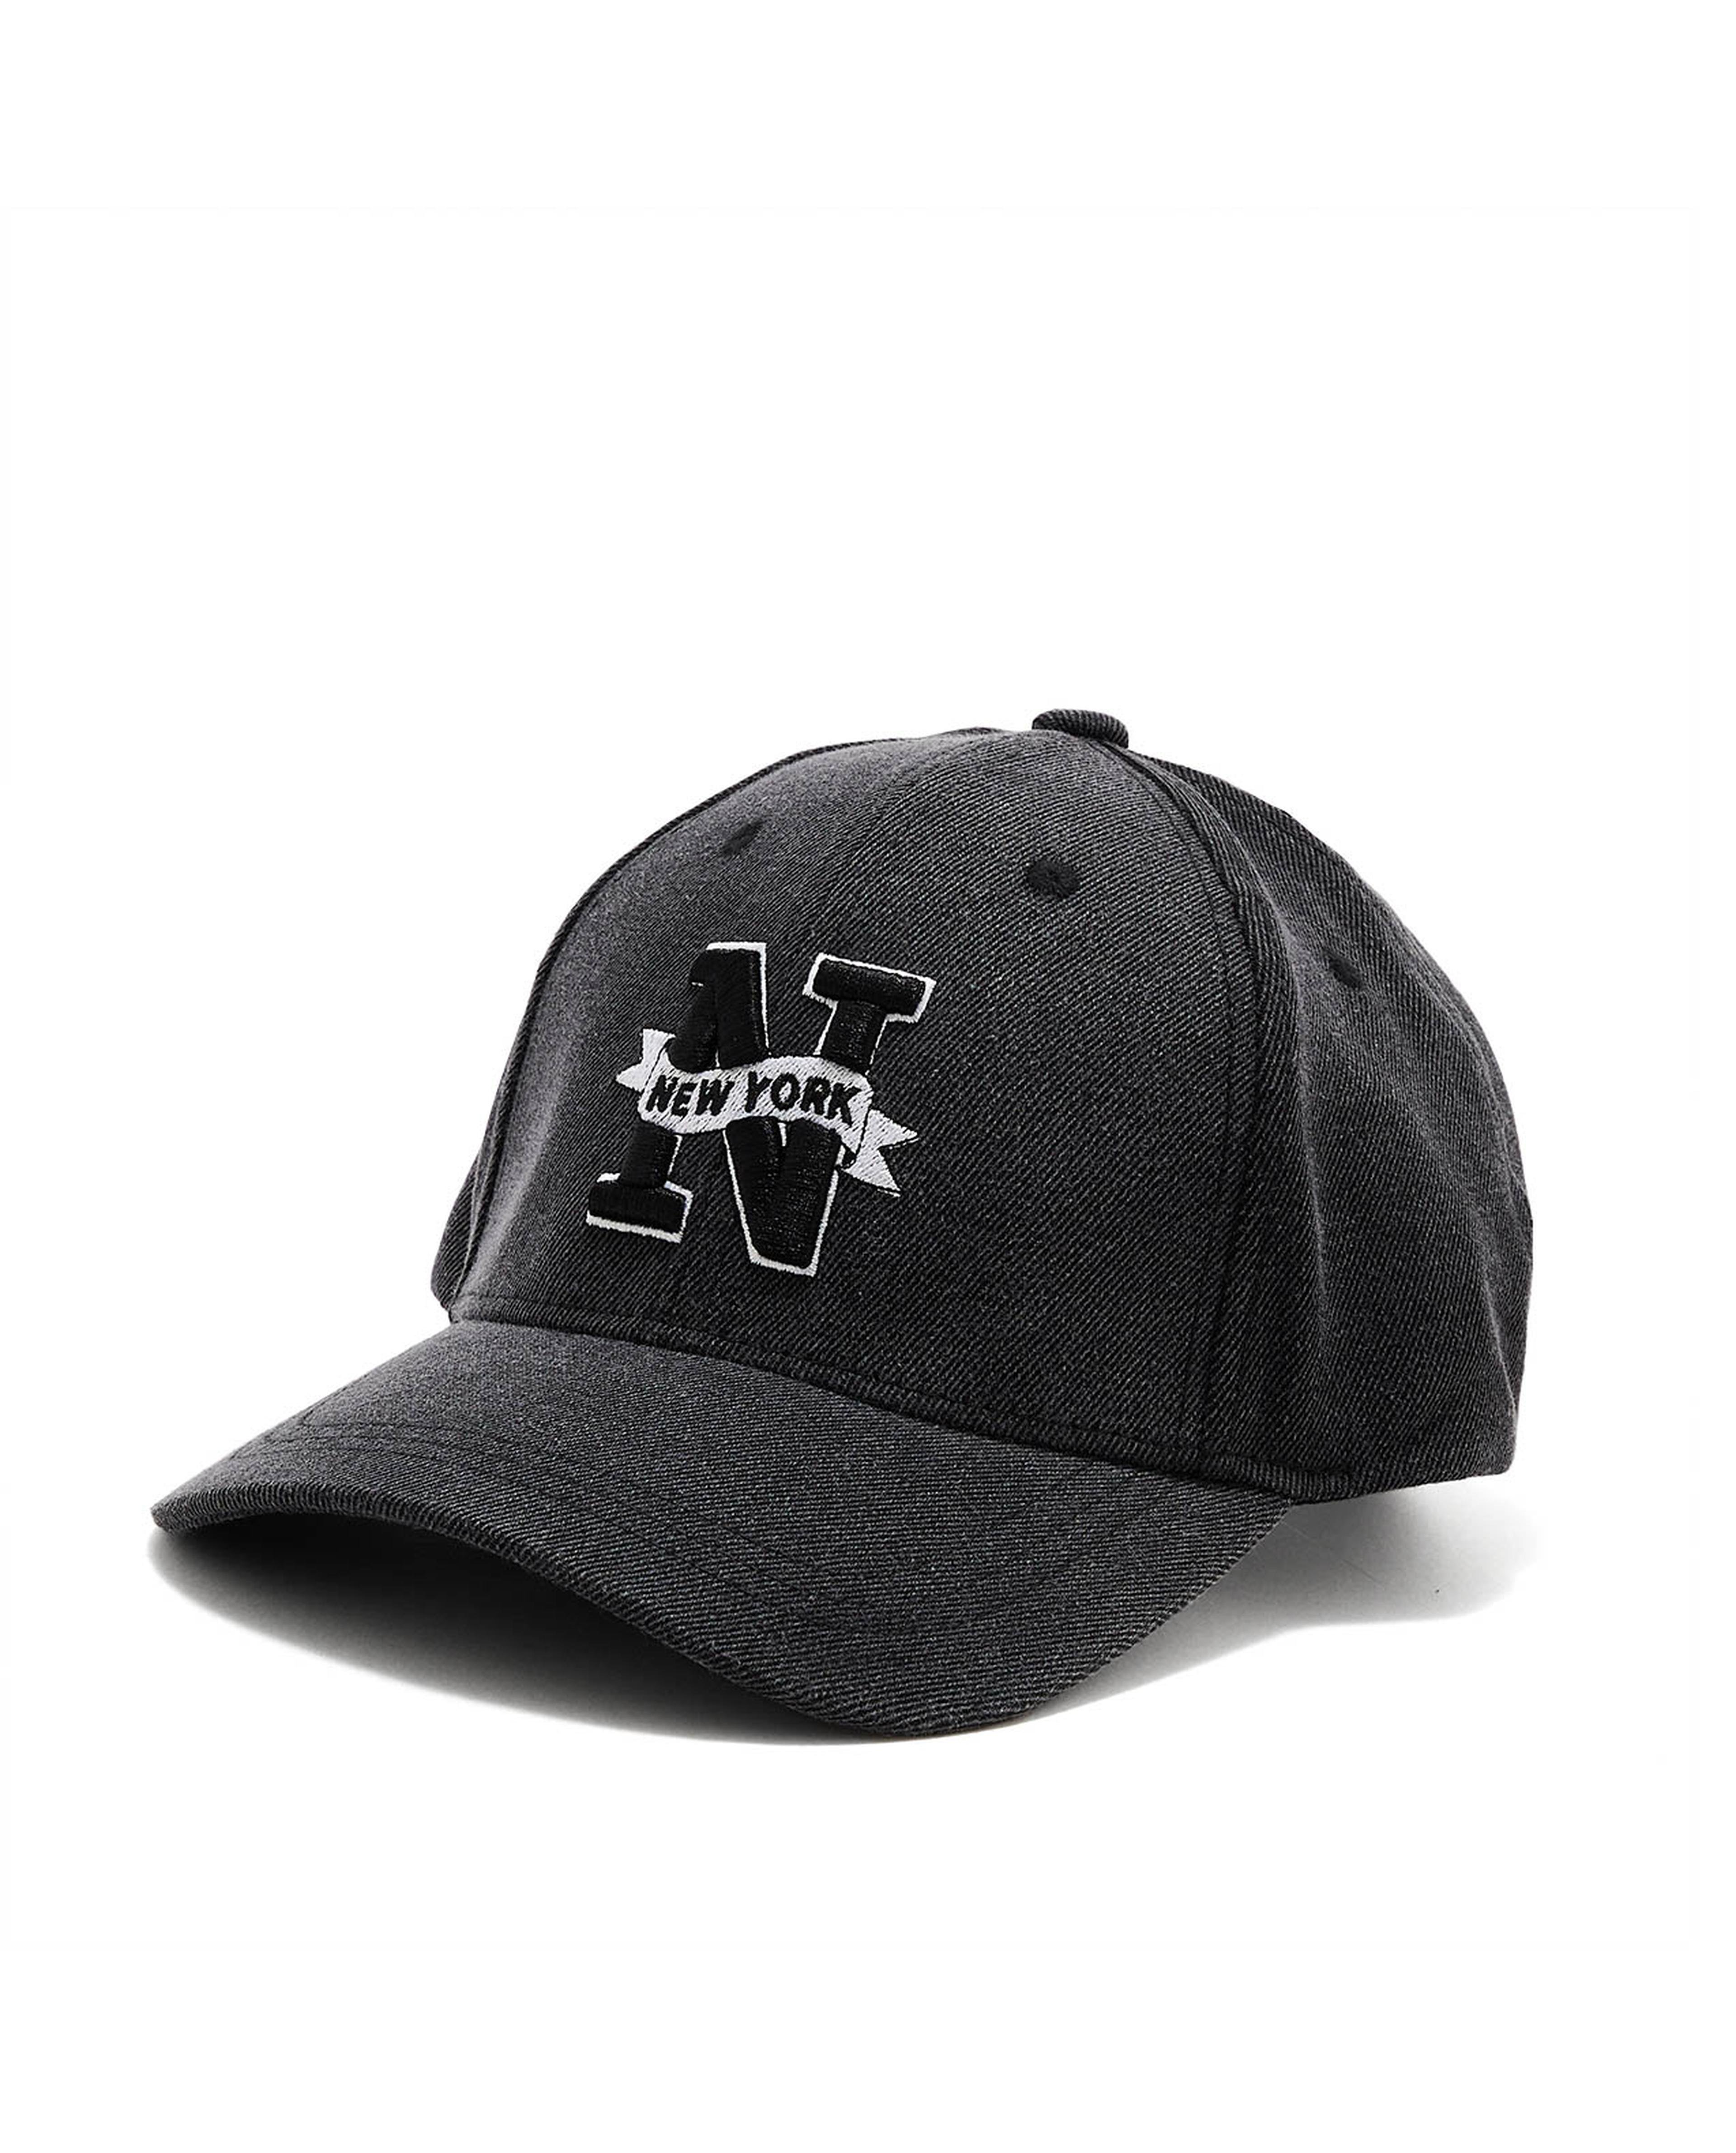 Embroidered Baseball Cap